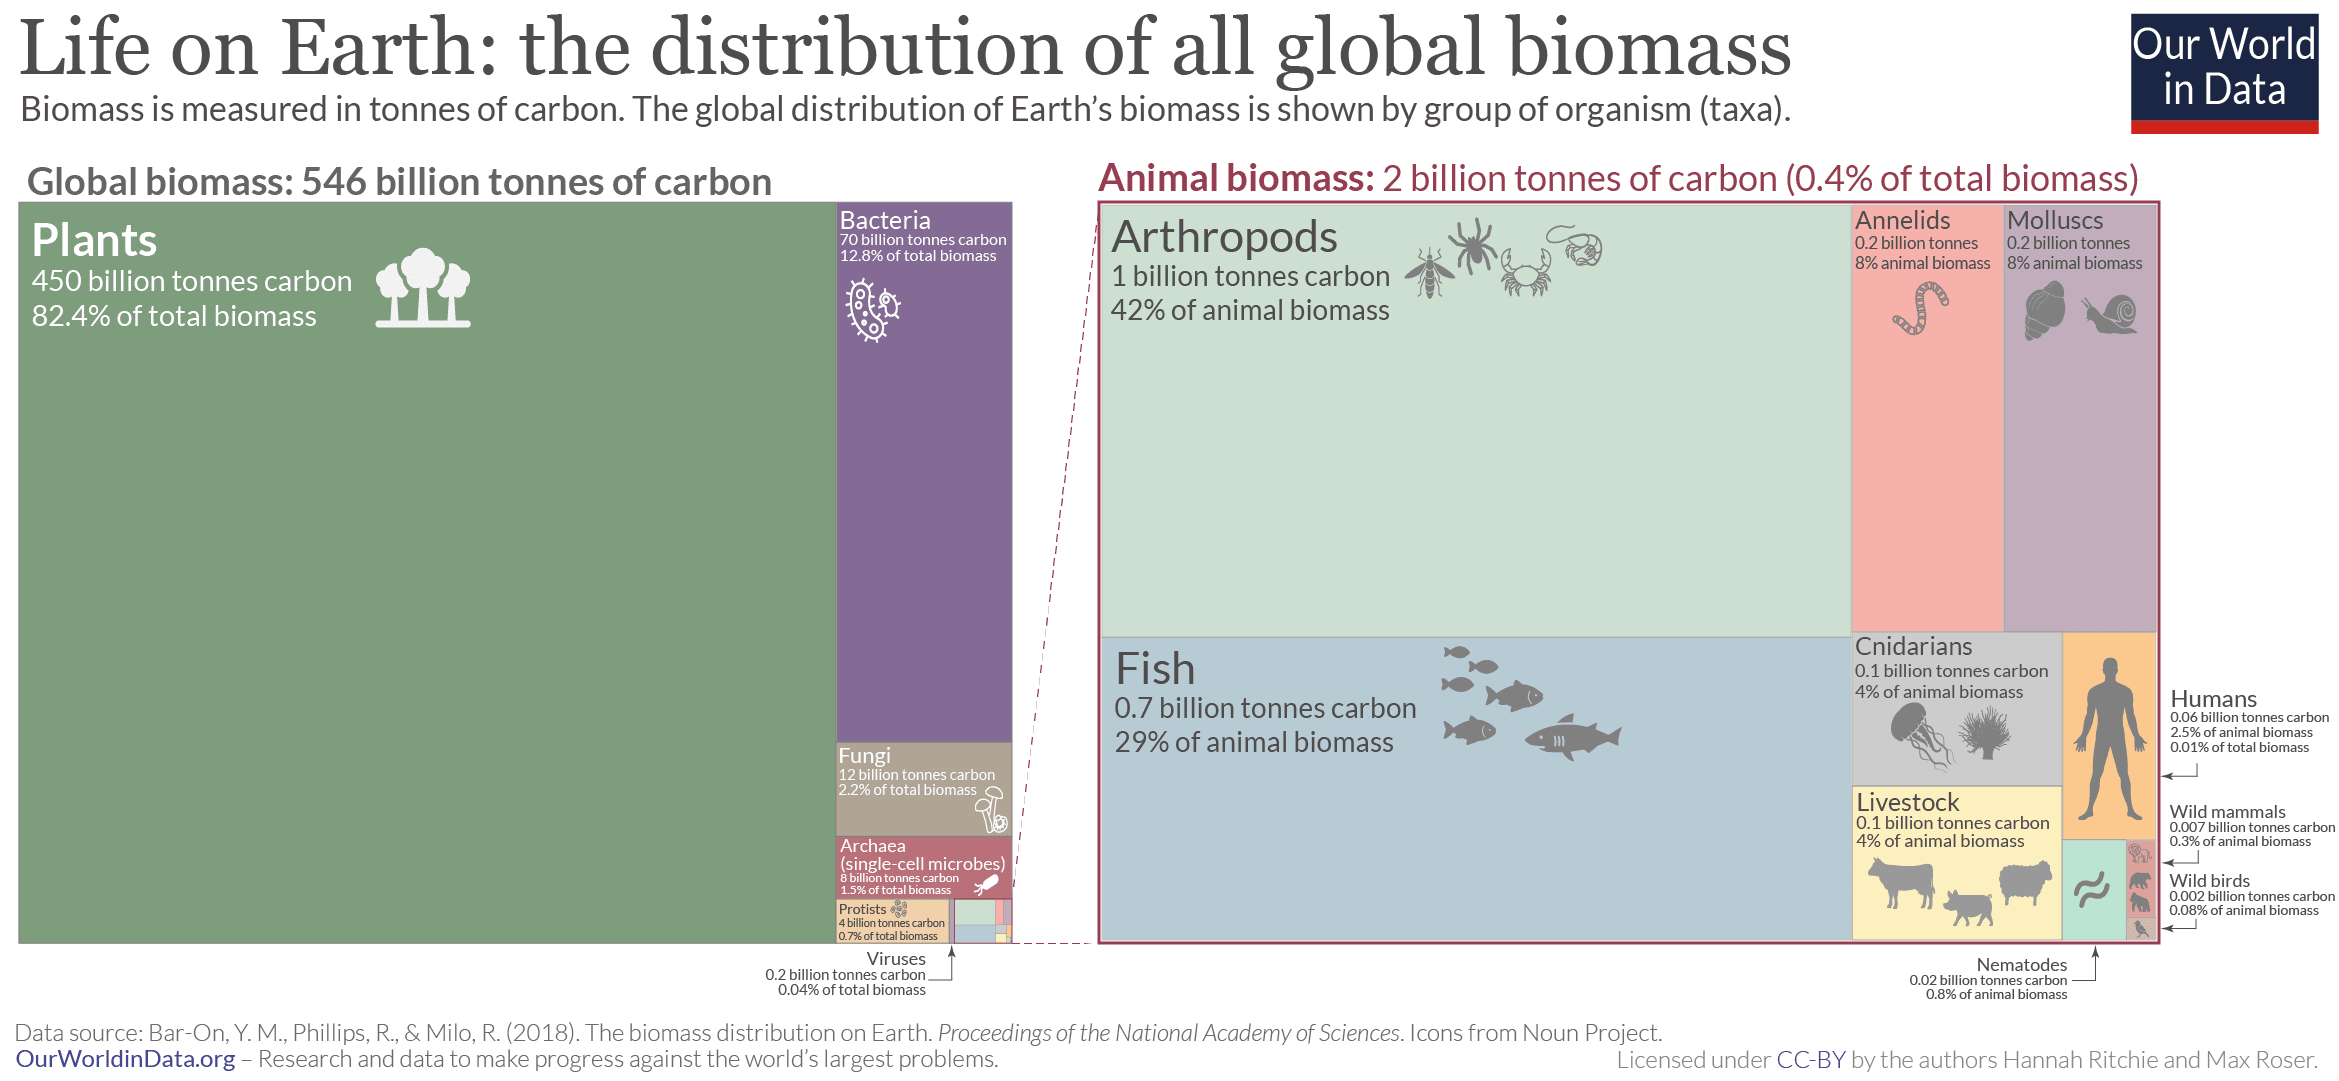 Life on Earth: the distribution of all global biomass